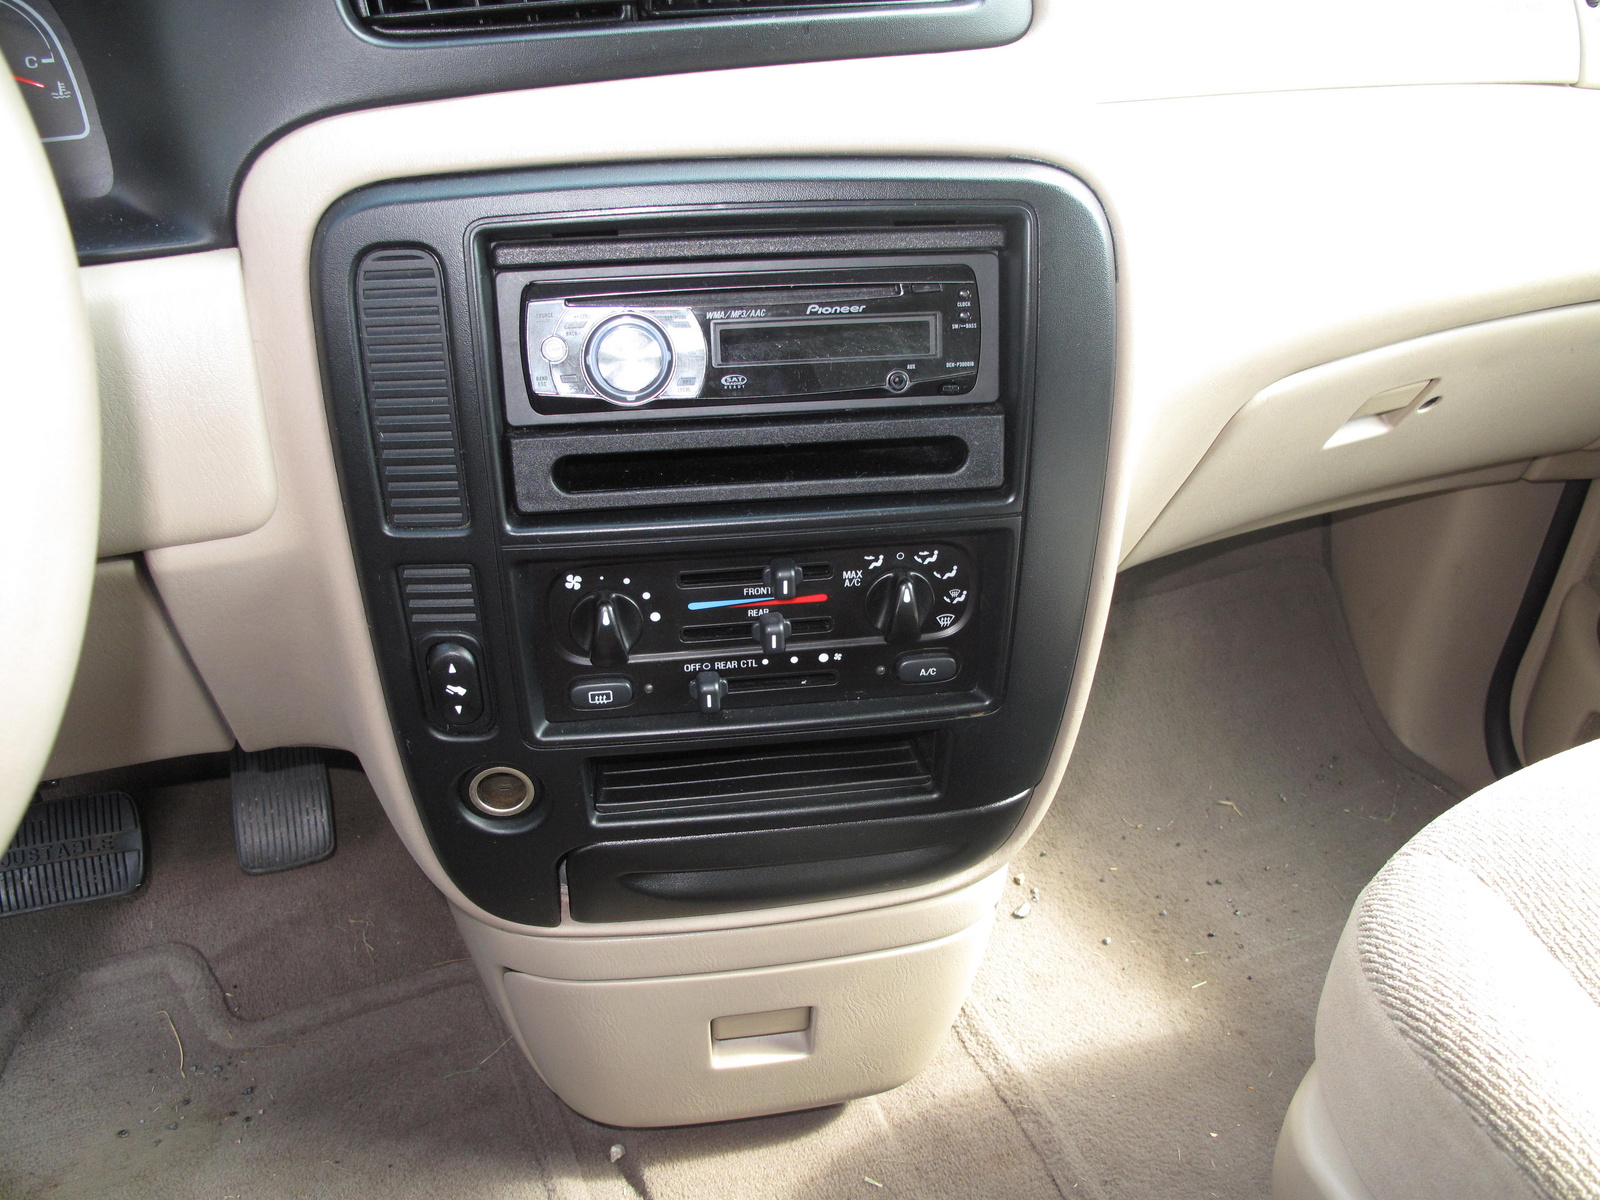 Ford windstar interior dimensions #10